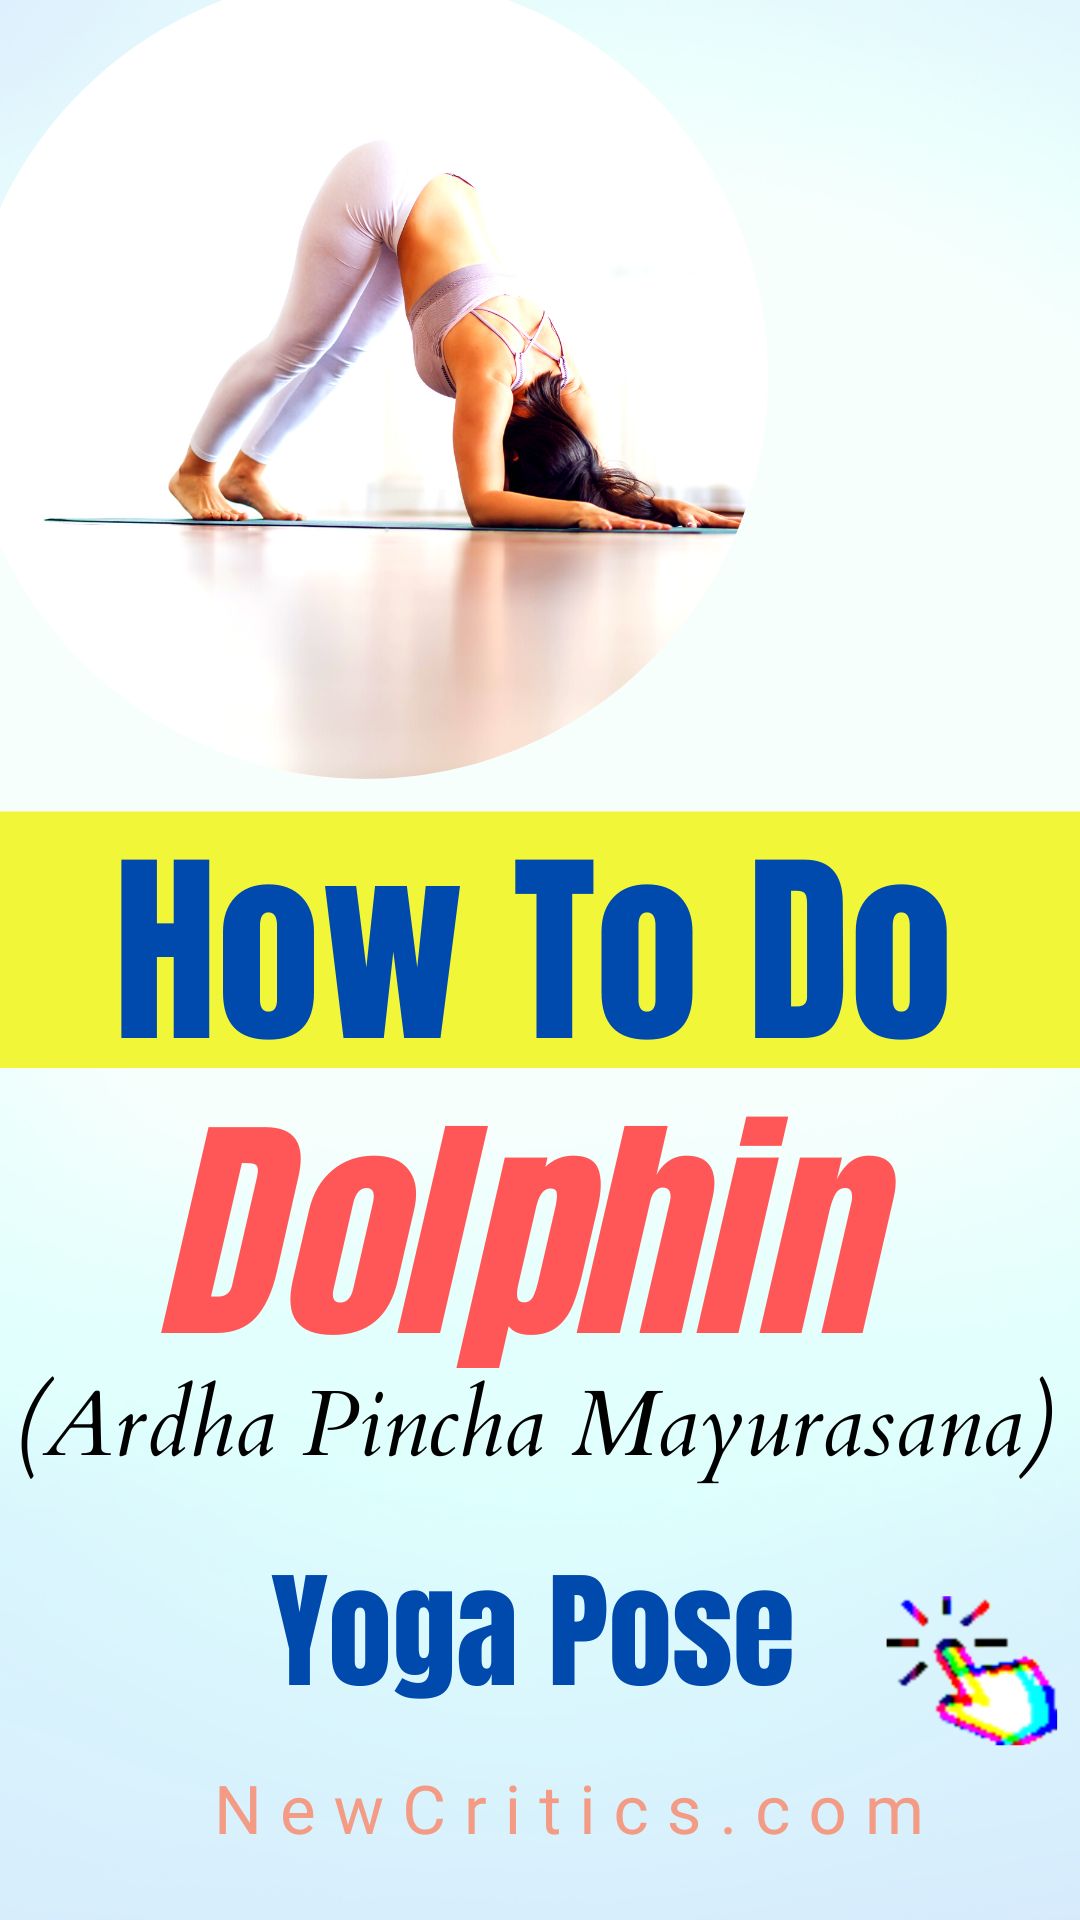 Dolphin Yoga Pose / Canva